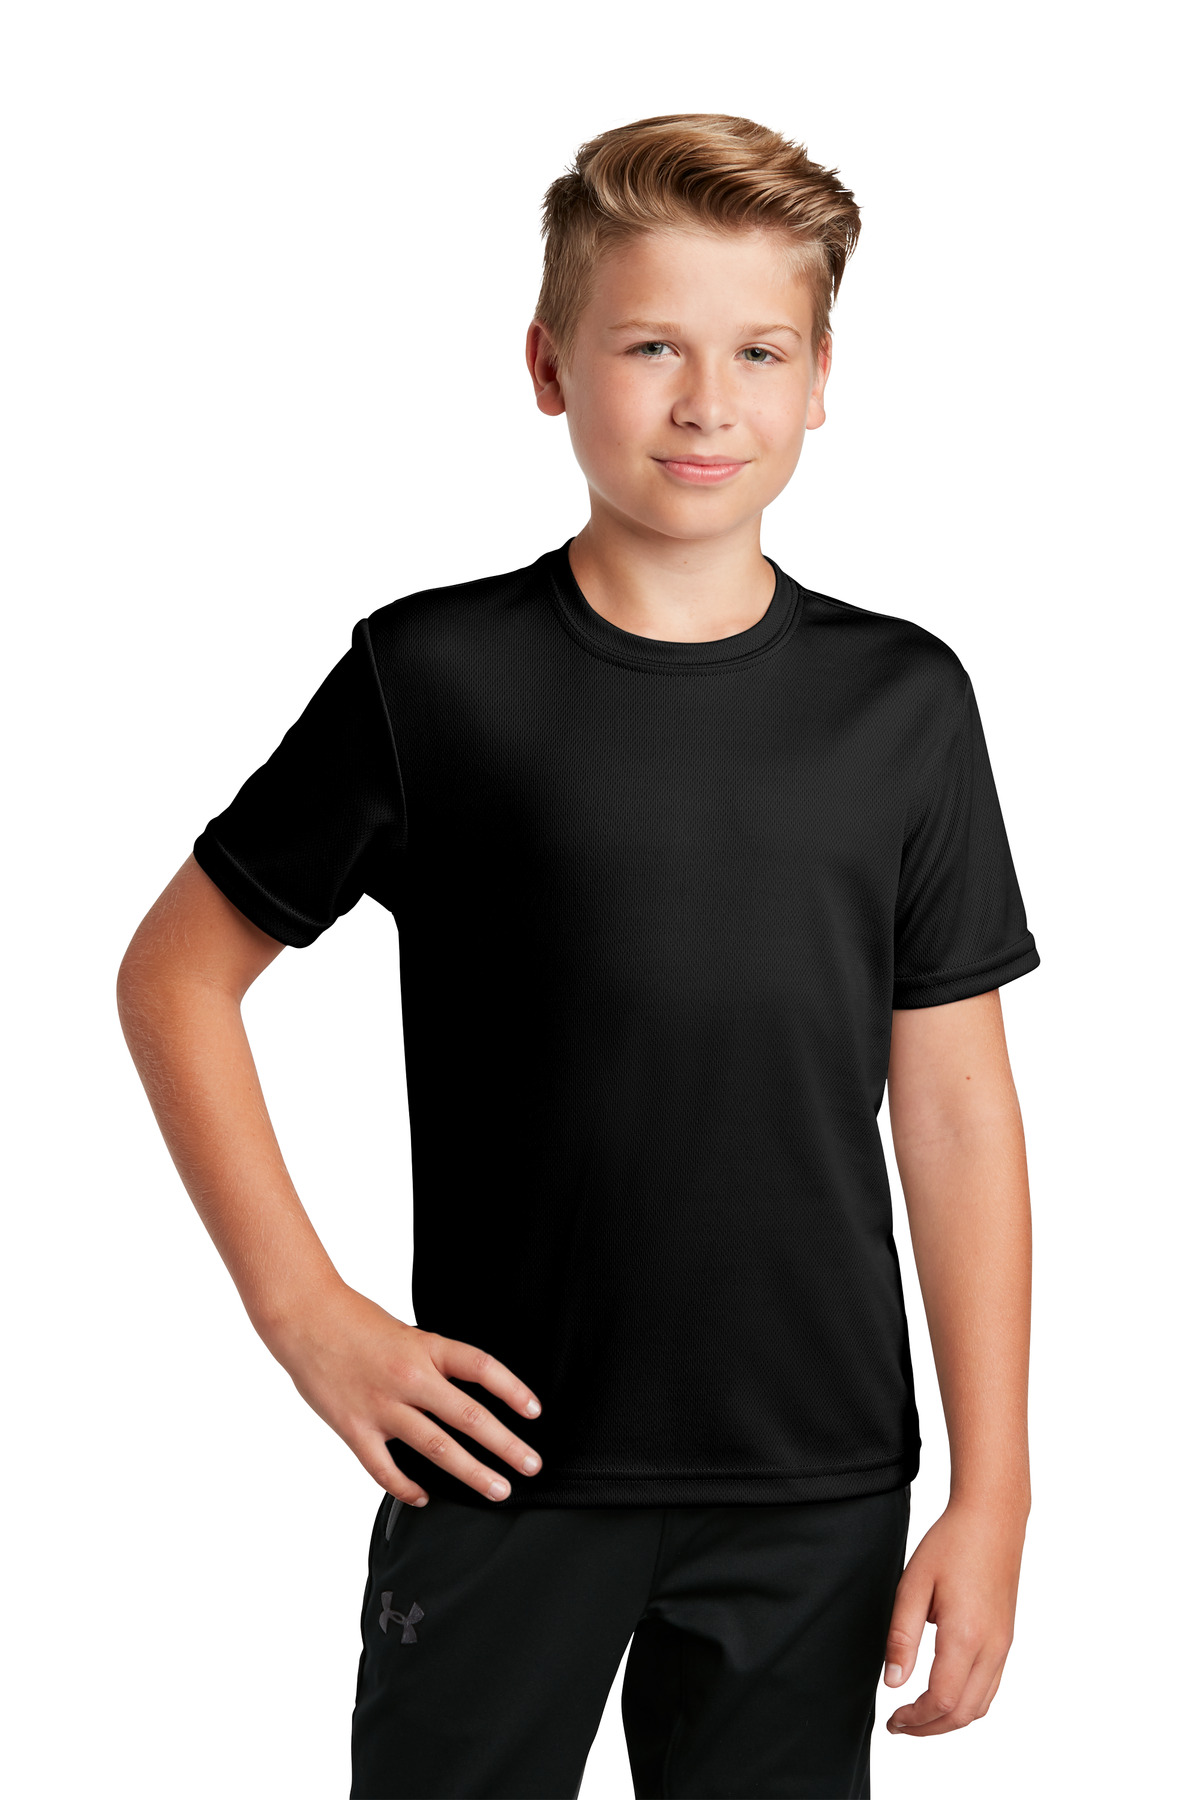 Sport-Tek Activewear Youth T-Shirts for Hospitality ® Youth PosiCharge® RacerMesh® Tee.-Sport-Tek